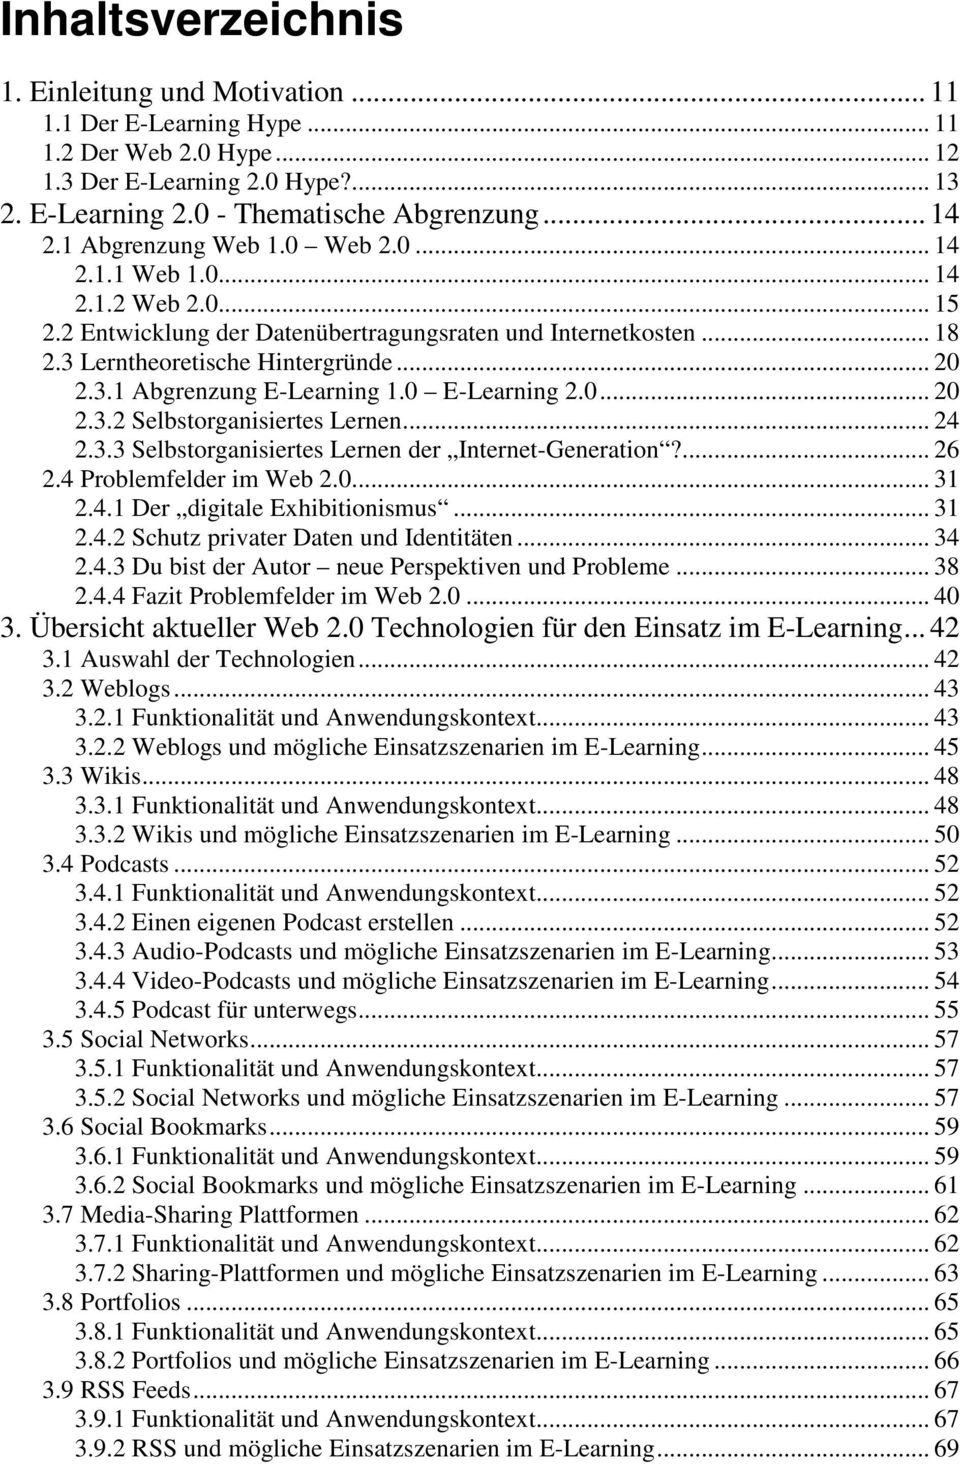 0 E-Learning 2.0... 20 2.3.2 Selbstorganisiertes Lernen... 24 2.3.3 Selbstorganisiertes Lernen der Internet-Generation?... 26 2.4 Problemfelder im Web 2.0... 31 2.4.1 Der digitale Exhibitionismus.